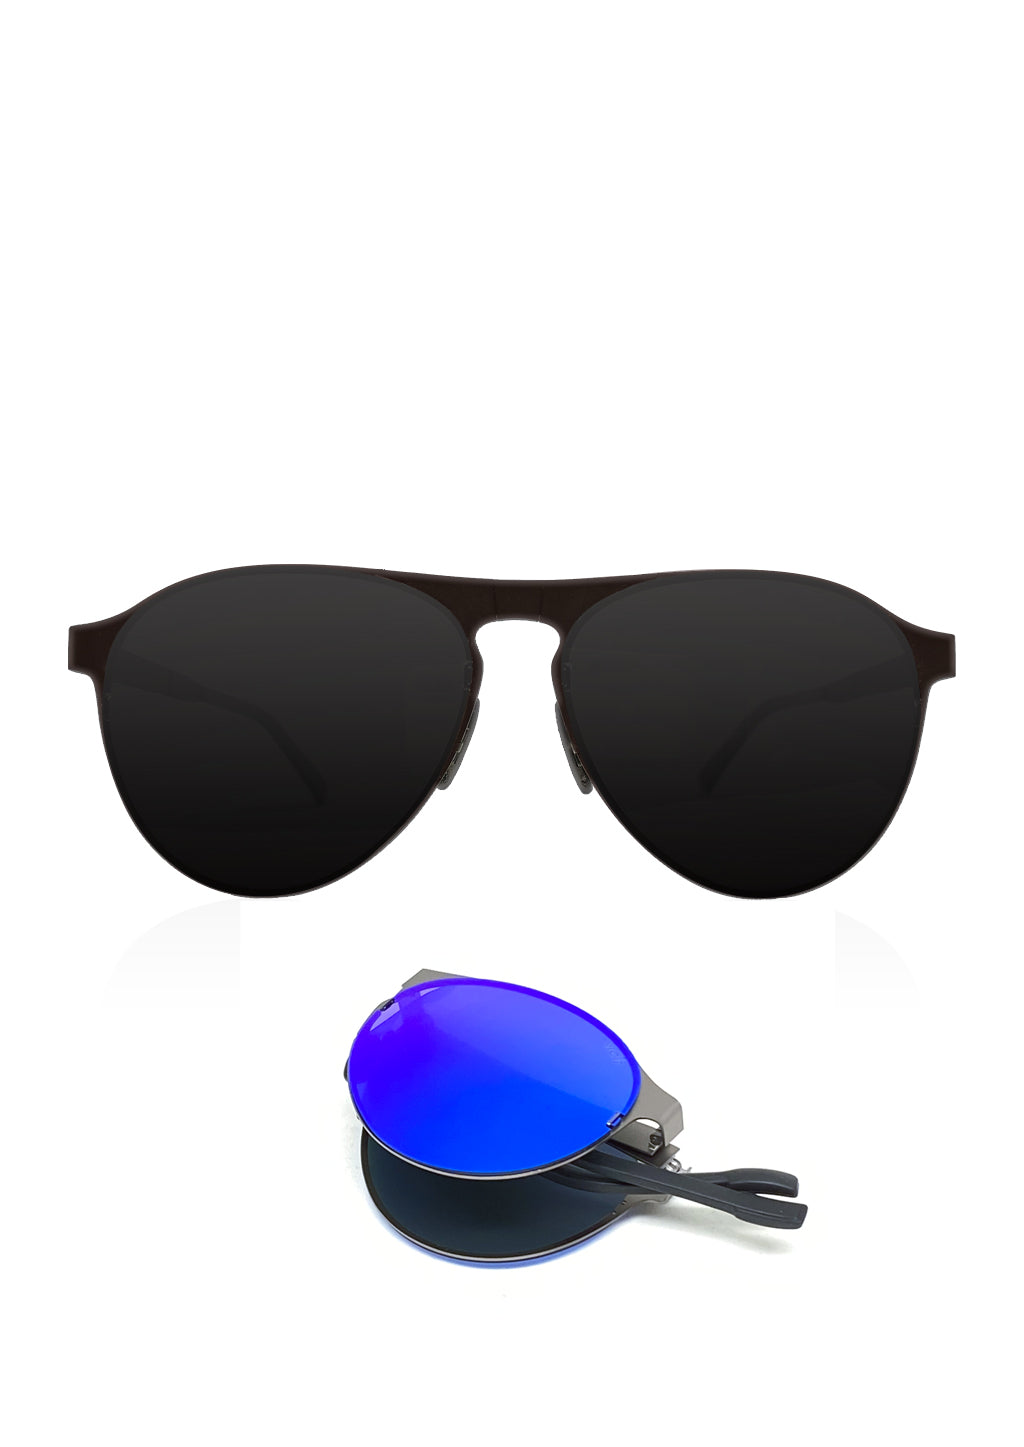 Foldable sunglasses - Scout classic aviator design - Front photo